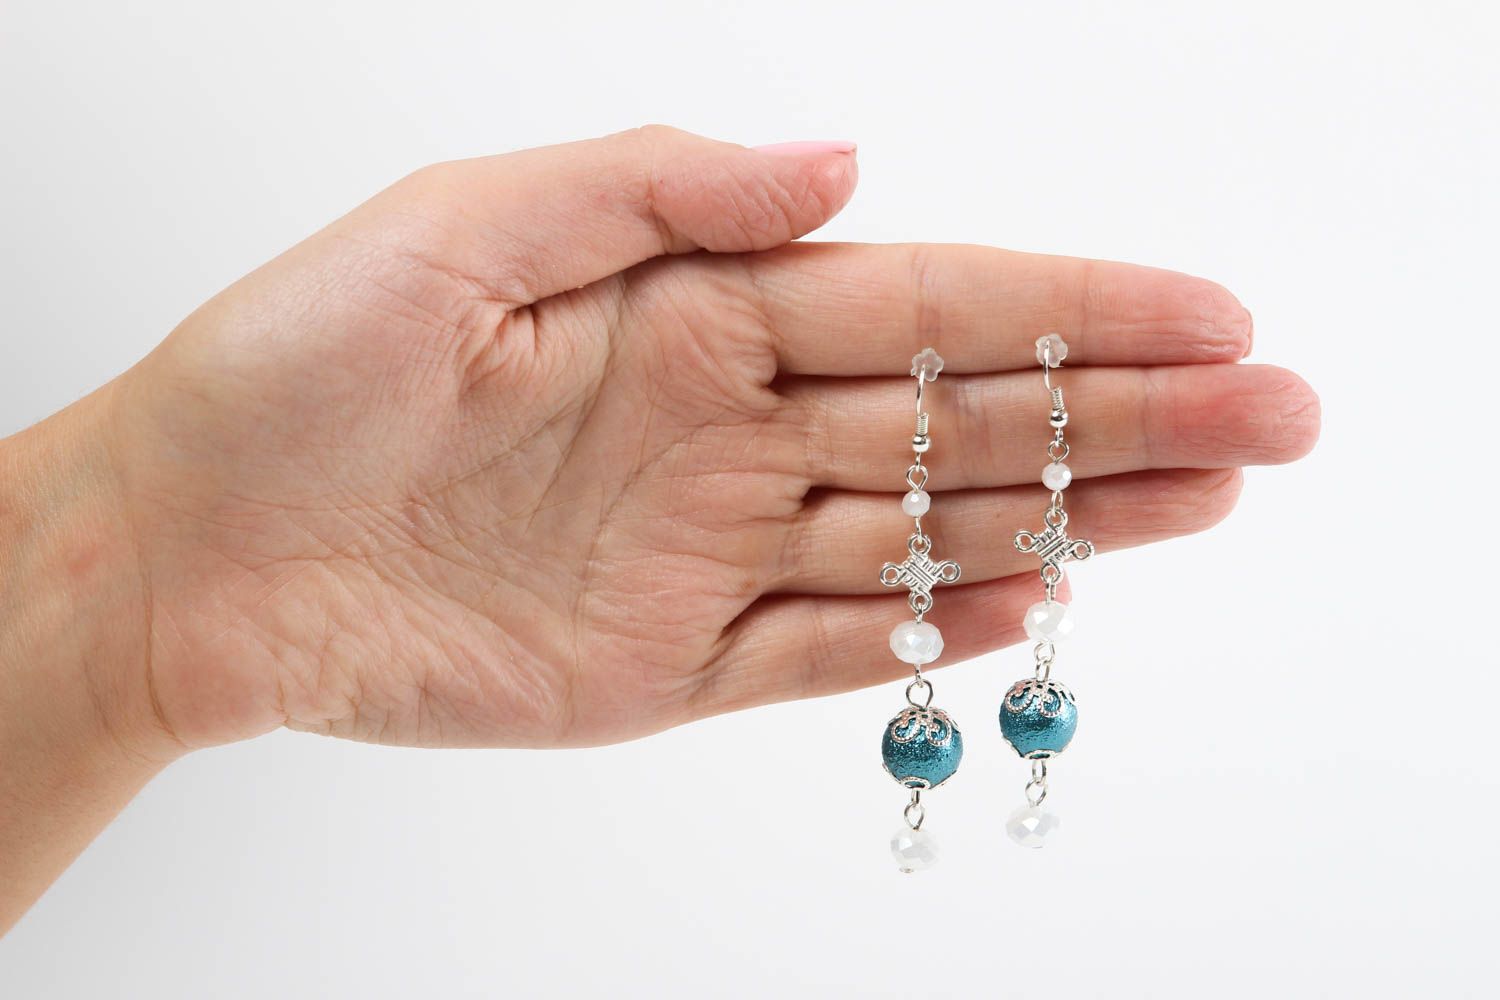 Crystal earrings handmade long crystal earrings with charms stylish jewelry photo 5